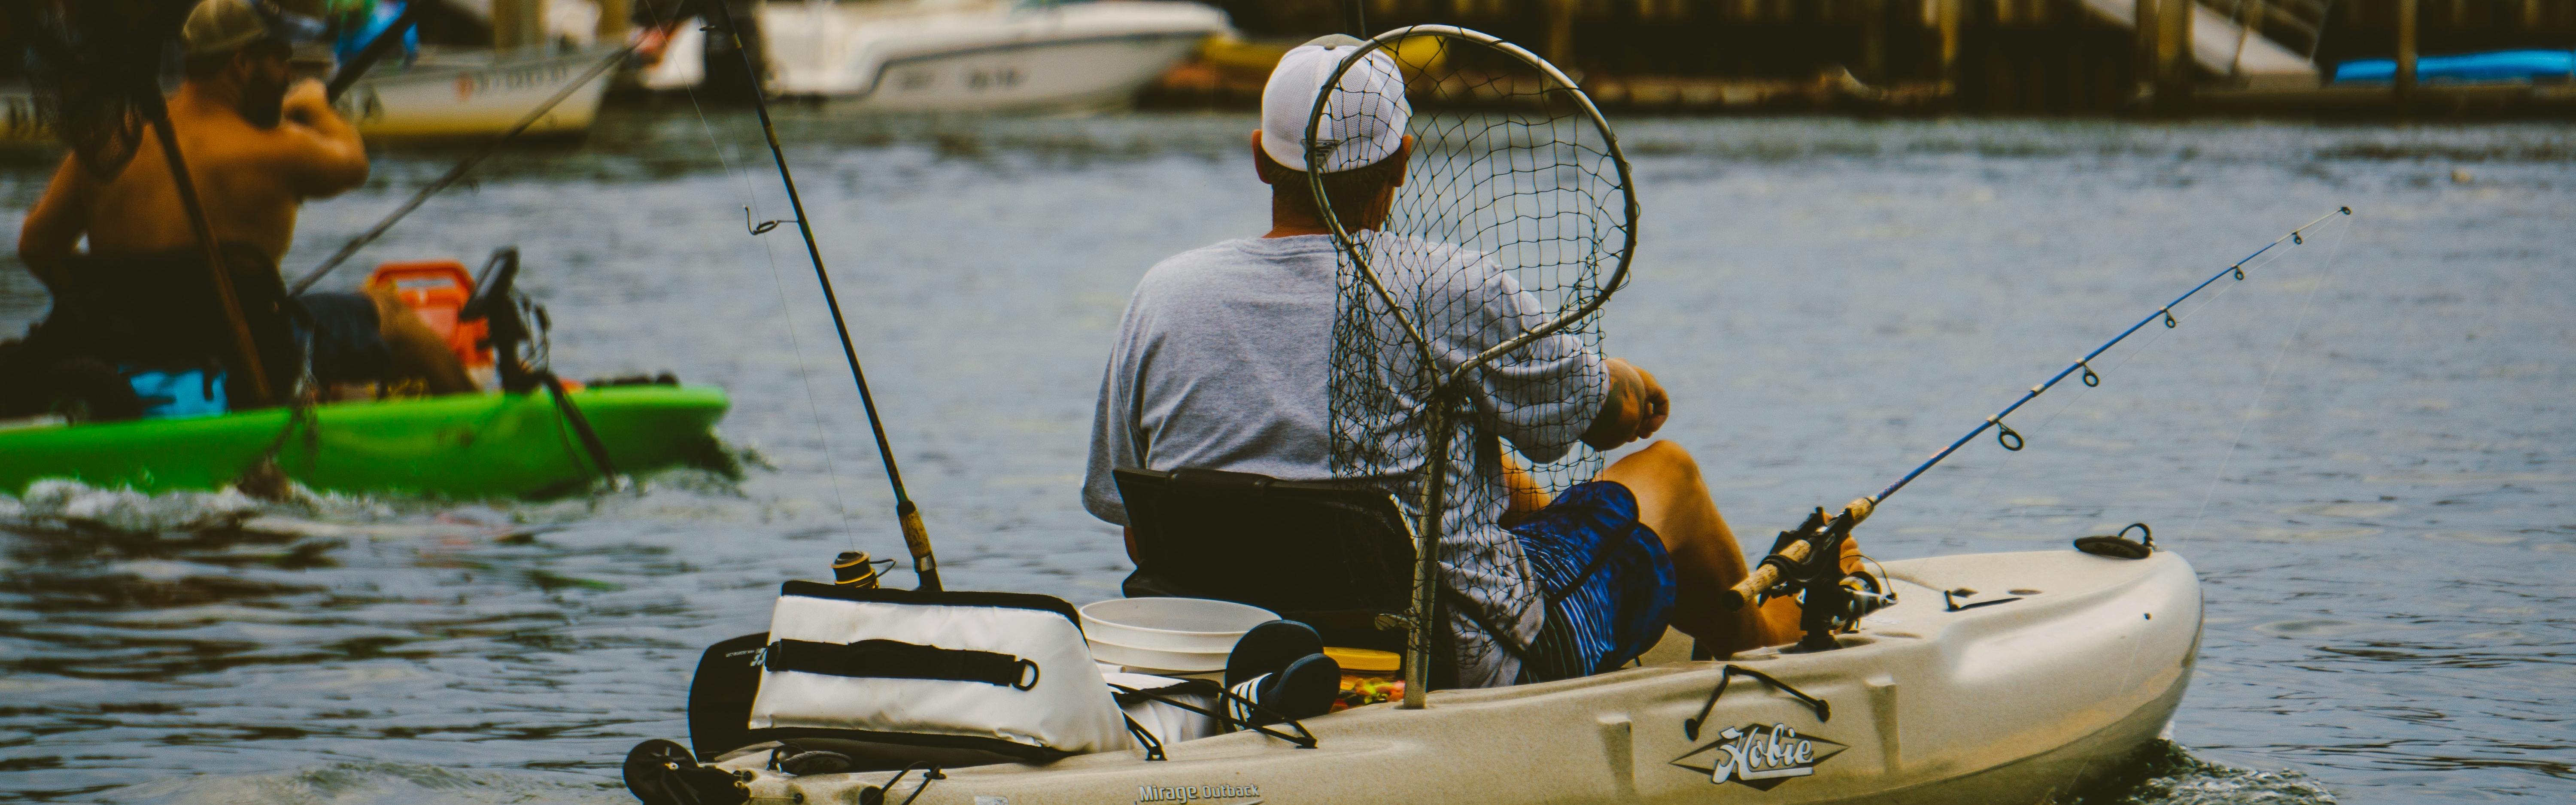 Kayak fishing: Must-have rod and reel setup - Bassmaster